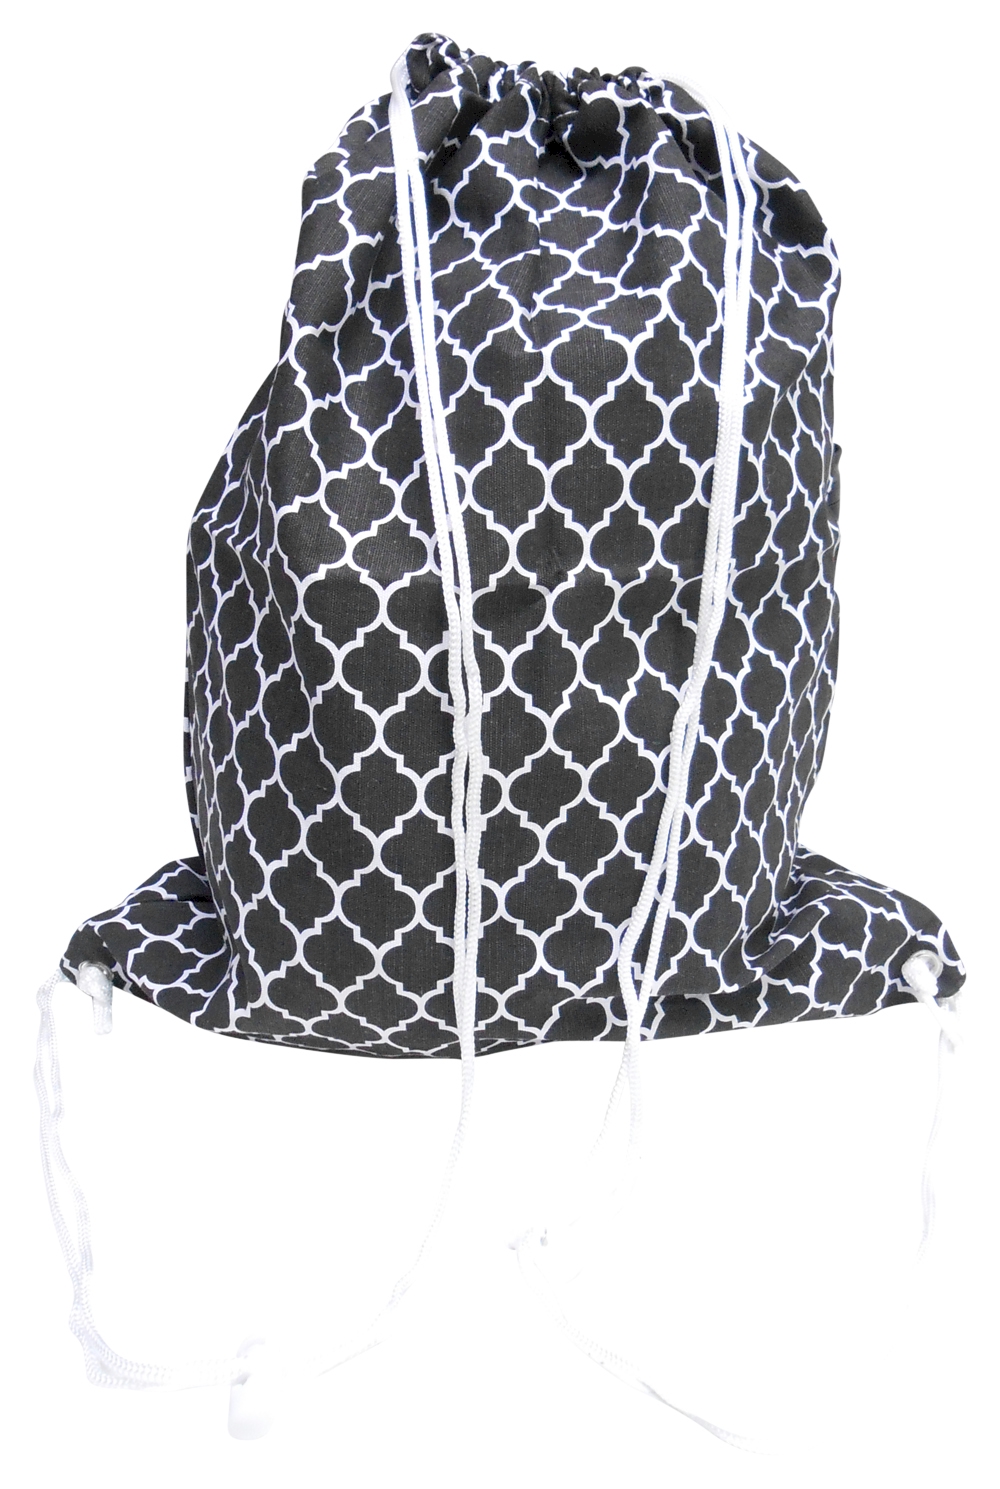 Gym Bag Drawstring Pack Embroidery Blanks in Quatrefoil Print  - BLACK